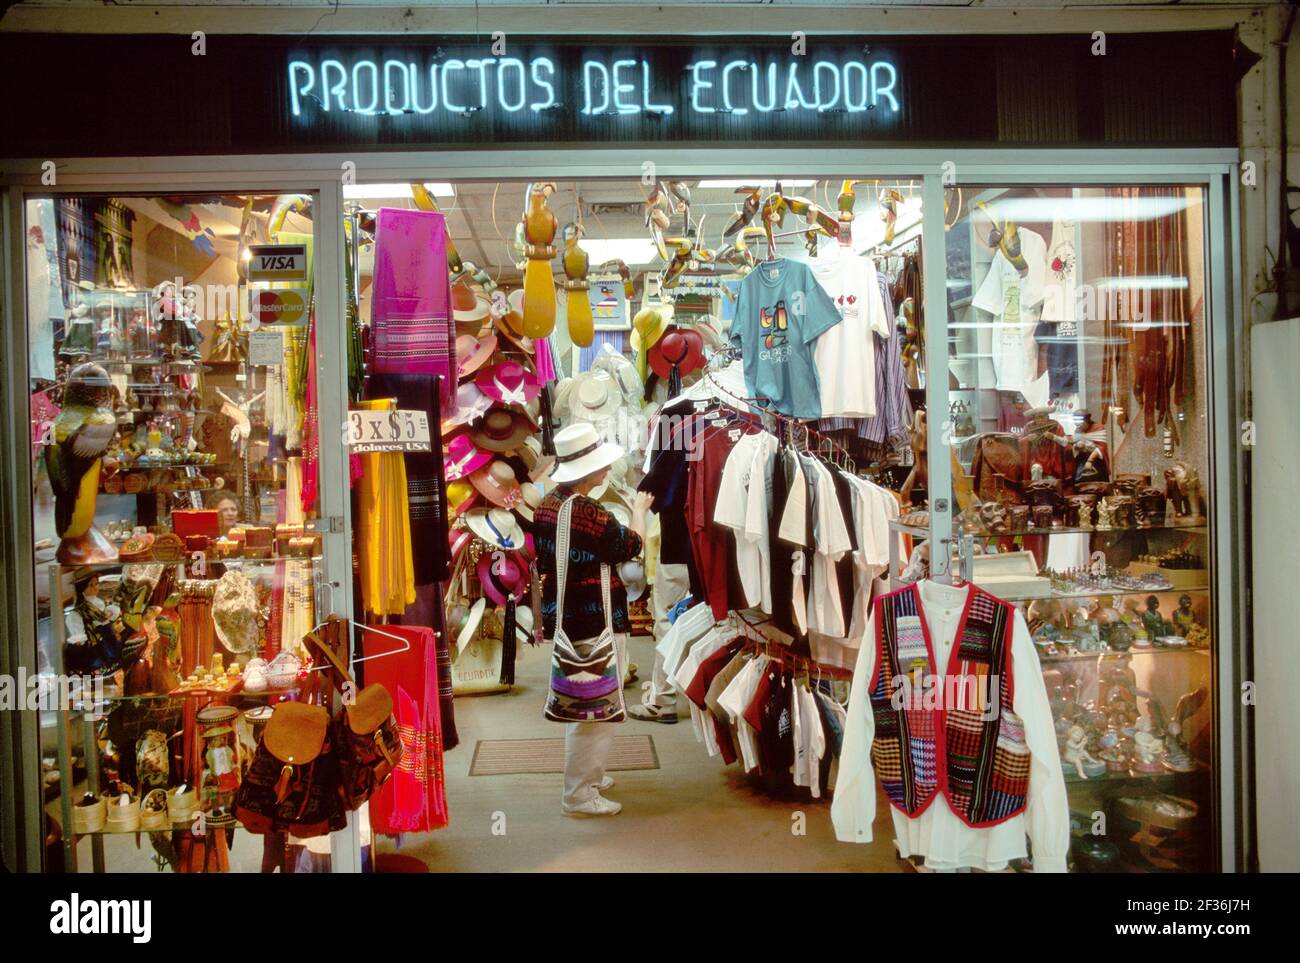 Guayaquil Ecuador Ecuadorianischer Südamerika amerikanischer Flughafen, Aeropuerto Internacional José Joaquín De Olmedo Geschenkladen, Souvenirs Geschenke Kunst & cra Stockfoto